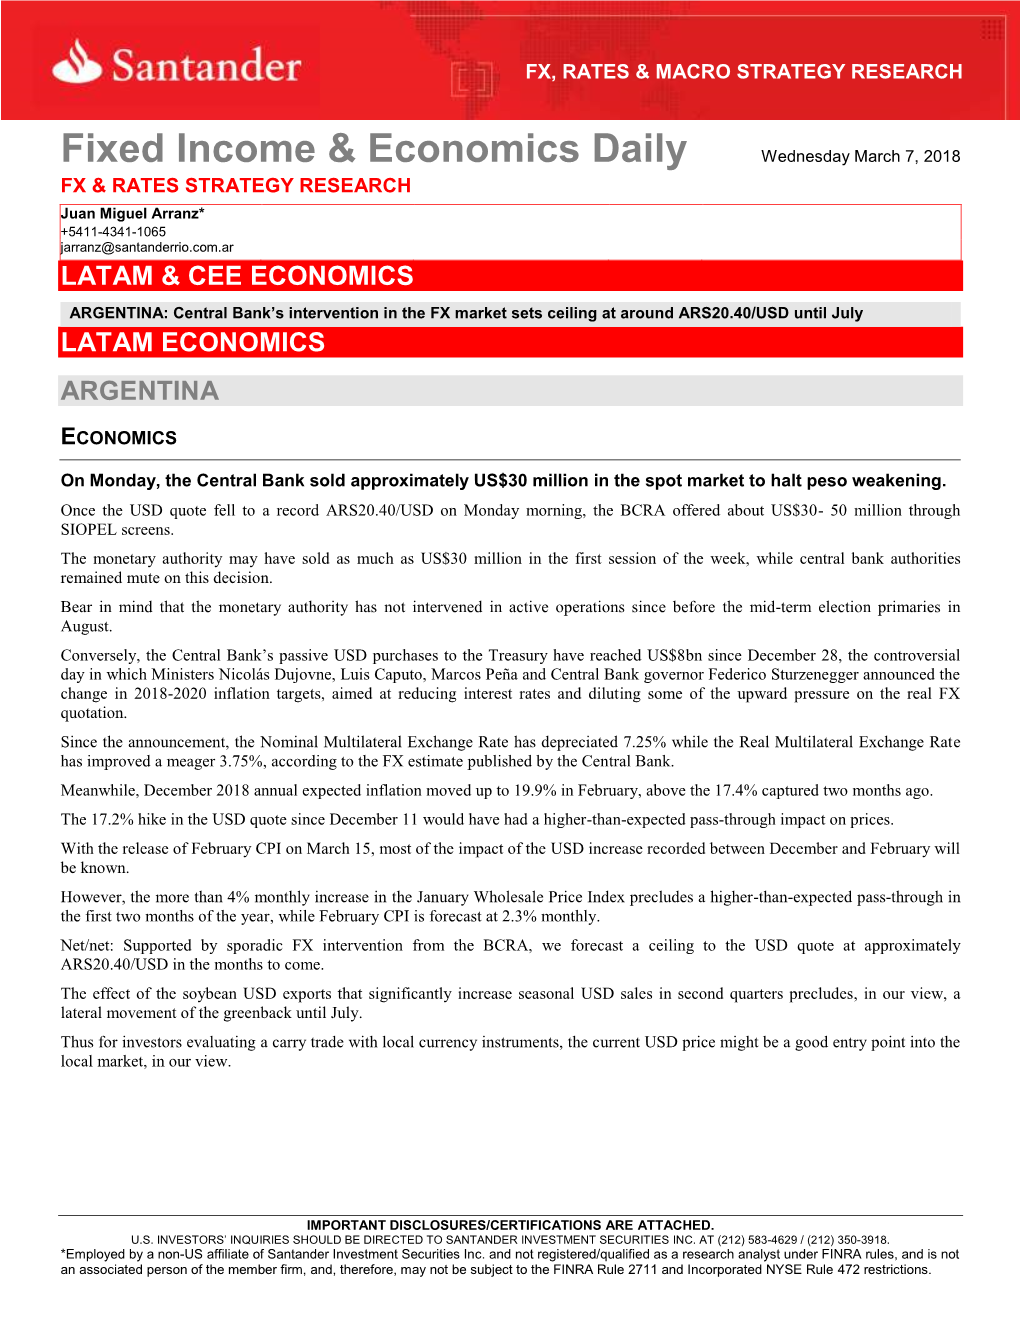 Fixed Income & Economics Daily